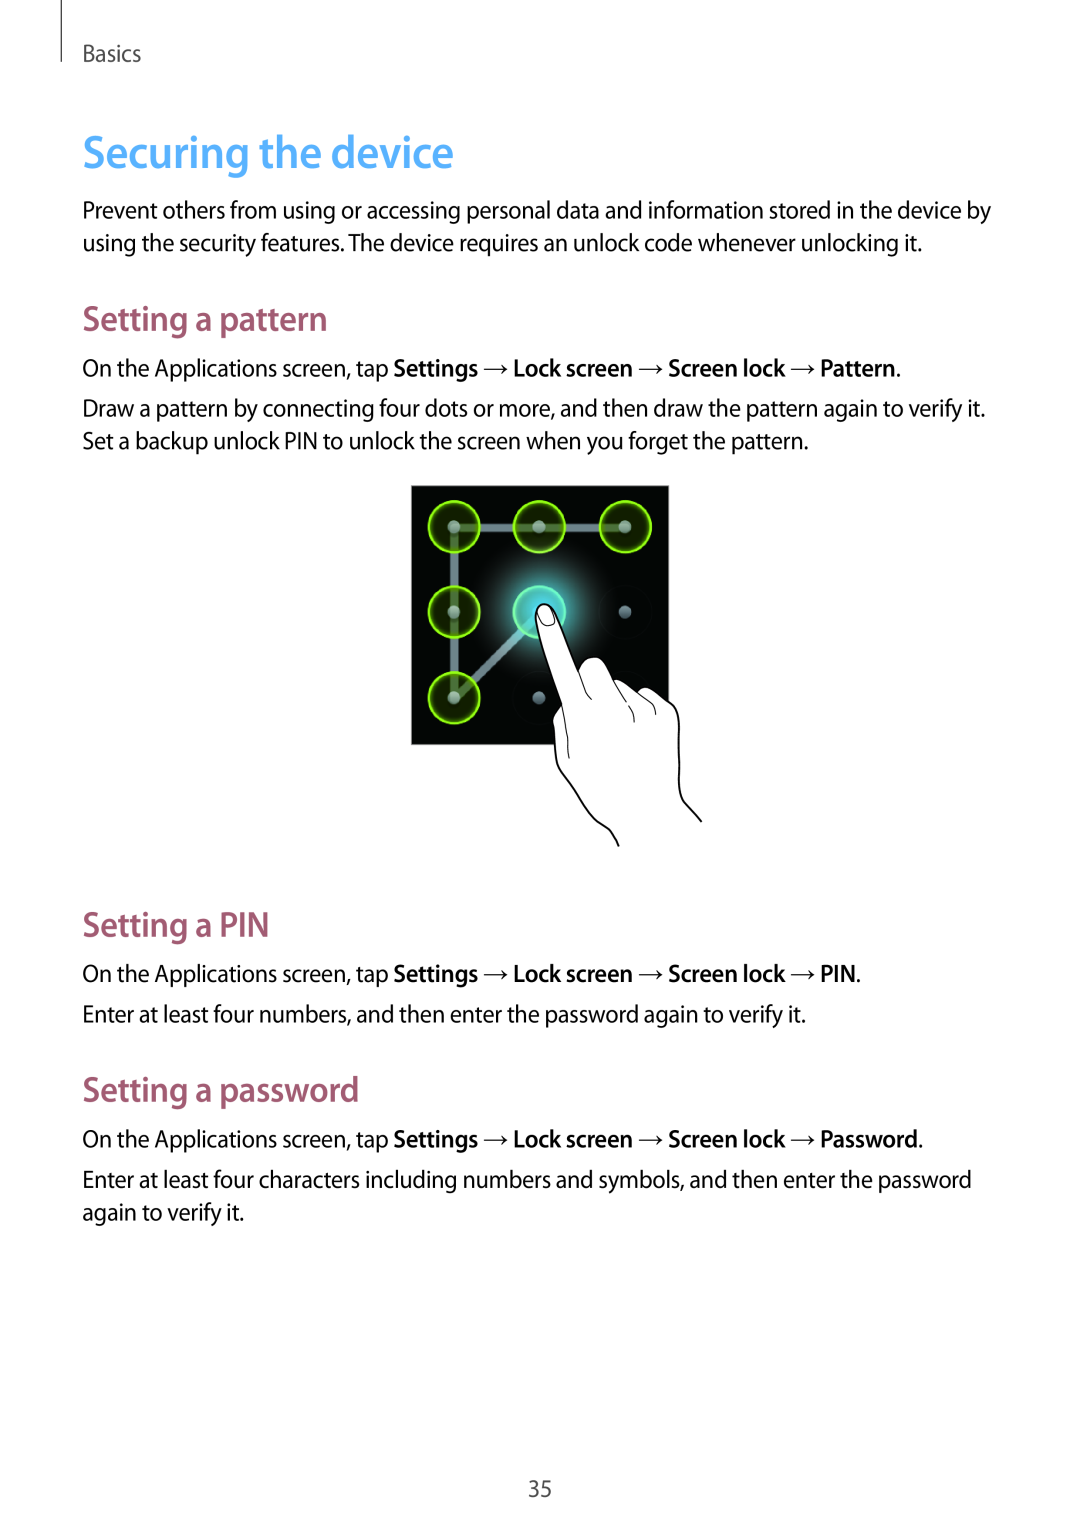 Samsung GT-S6790ZWYSEB, GT-S6790PWNTPH Securing the device, Setting a pattern, Setting a PIN, Setting a password, Basics 